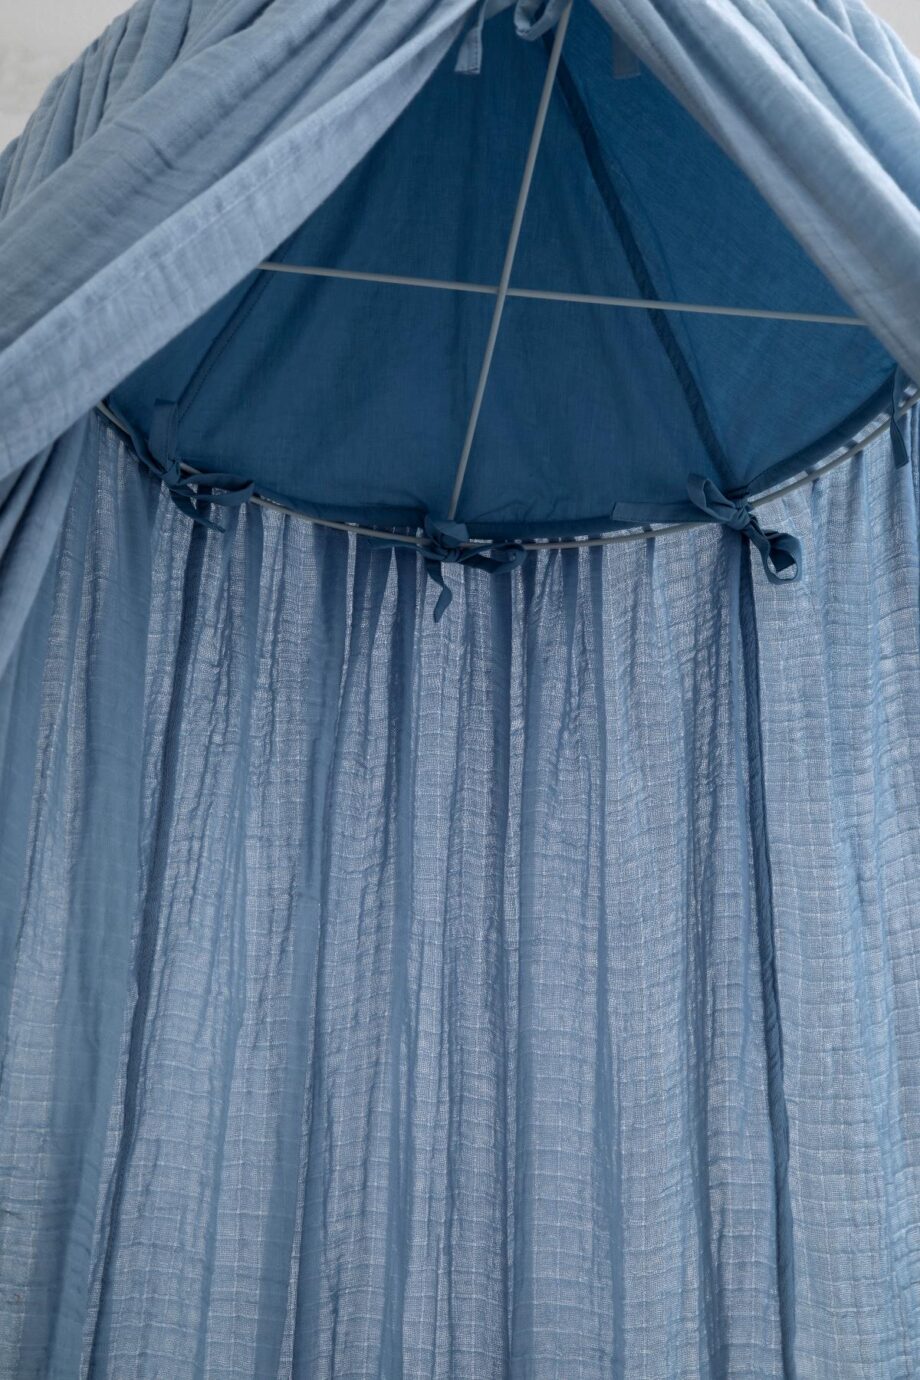 bed canopy powder blue